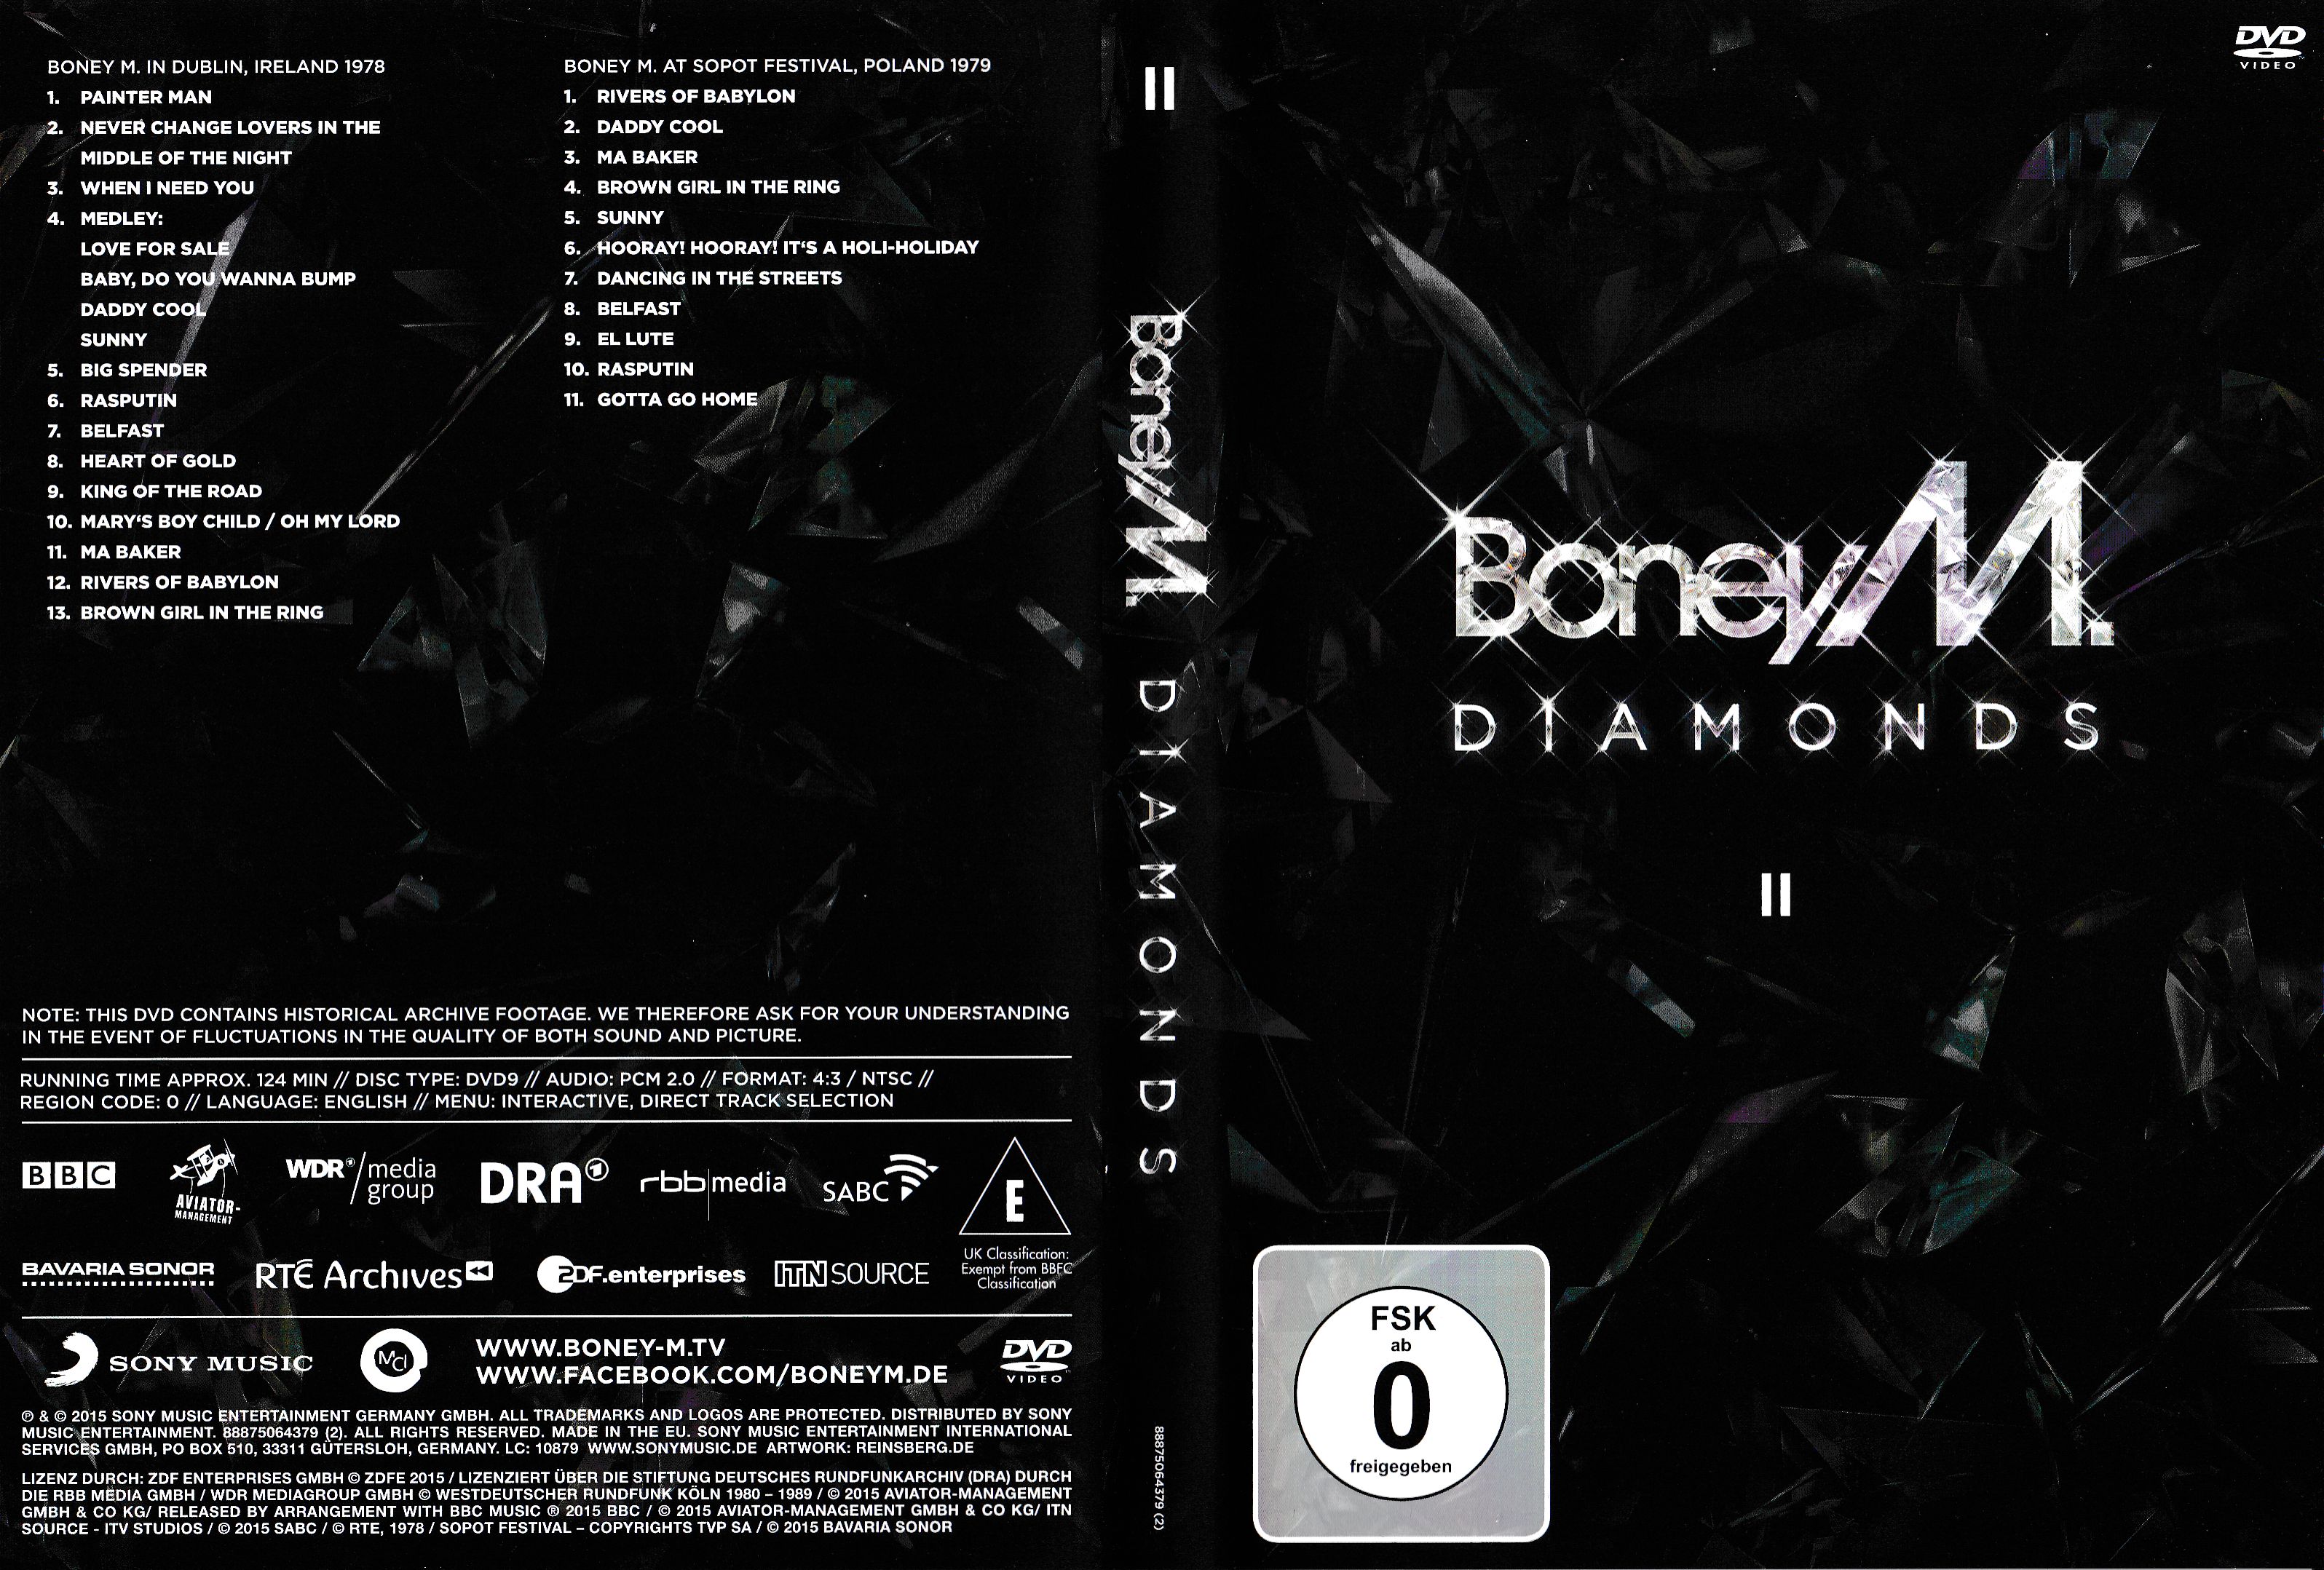 Jaquette DVD Boney M - Diamonds DVD Volume 2 